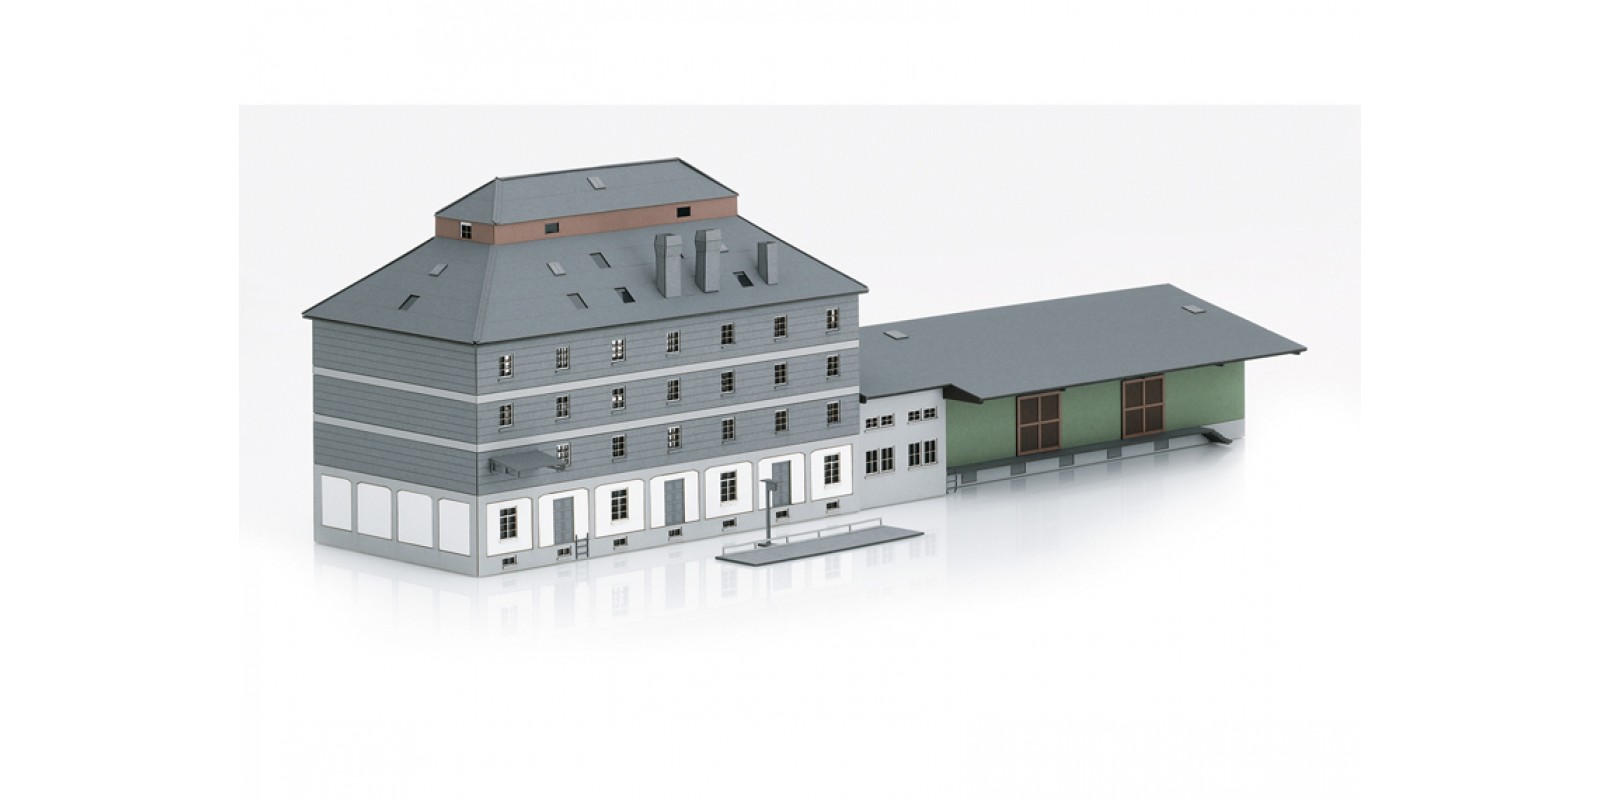 72706 Building Kit of the "Raiffeisen Warehouse with Market"